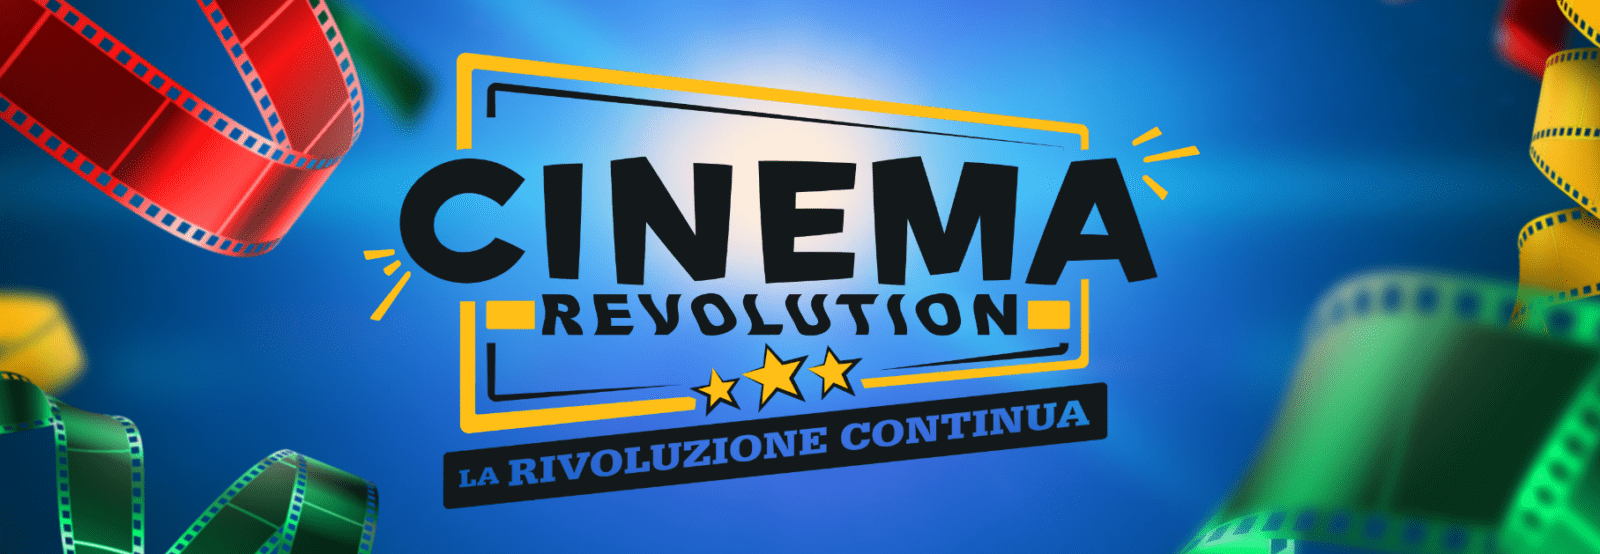 Cinema revolution in Sala Argentia